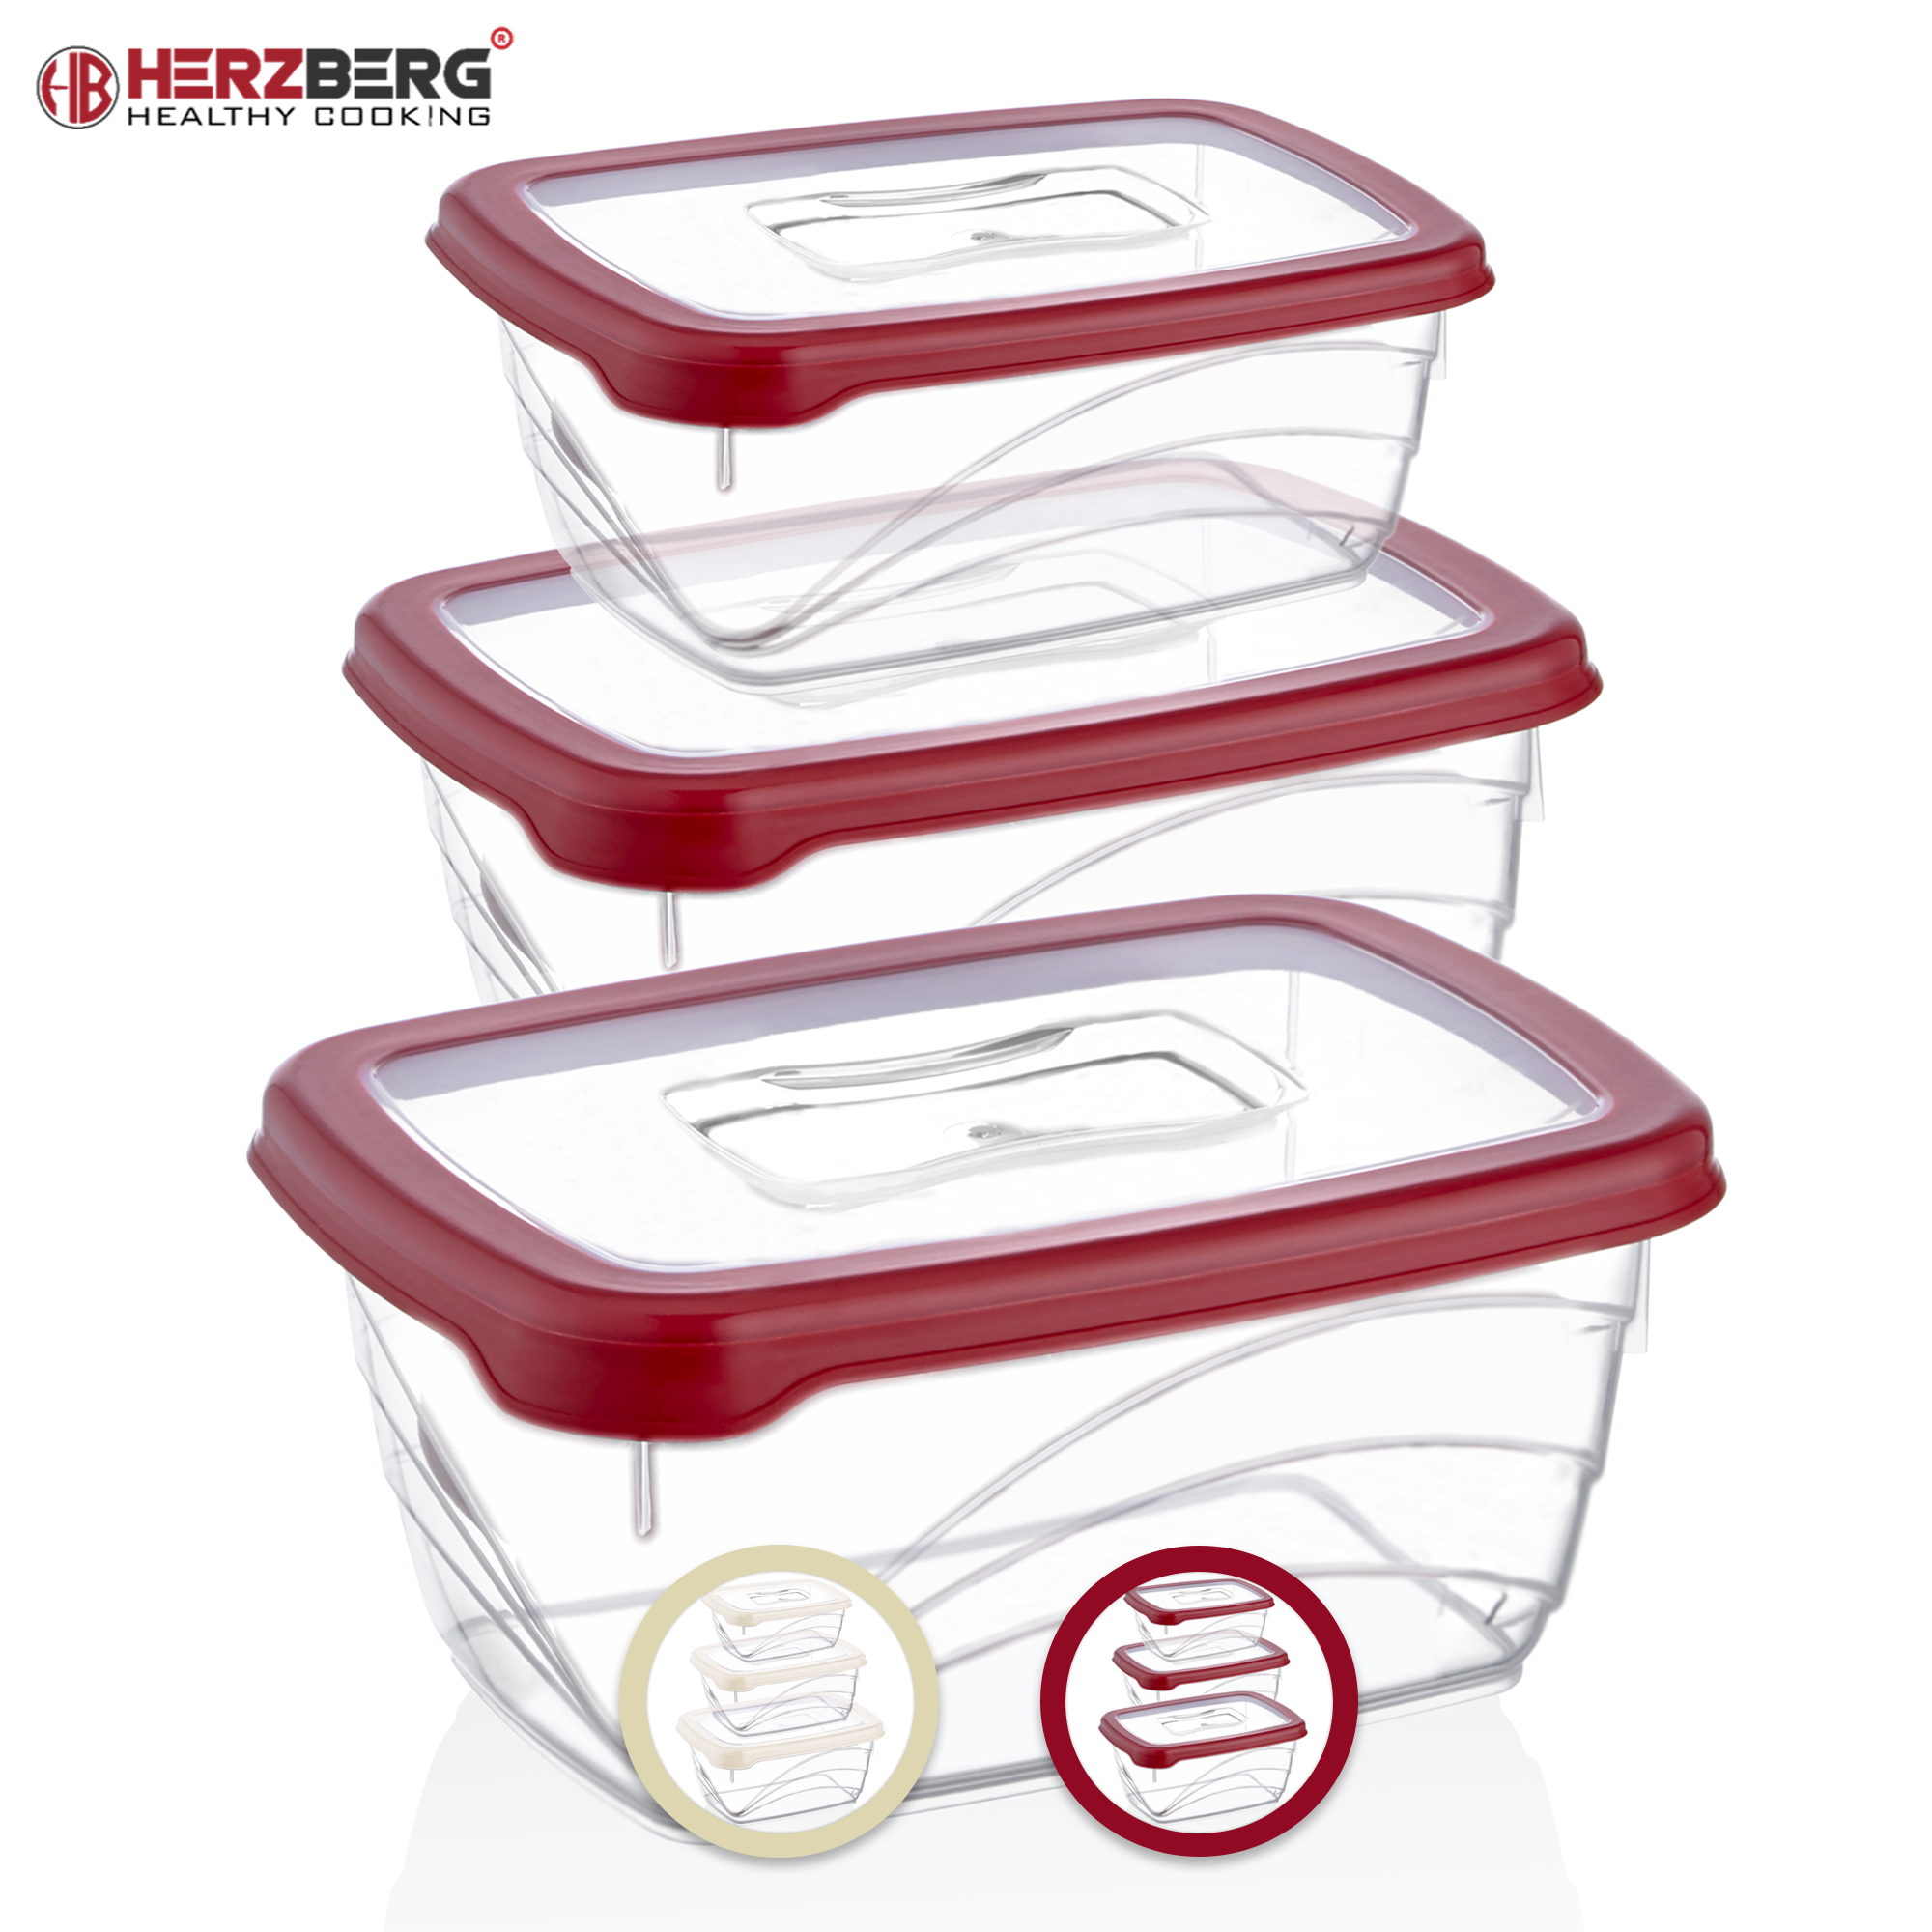 Saver box, food container, food box, glass food container, food keeper, sealable food container